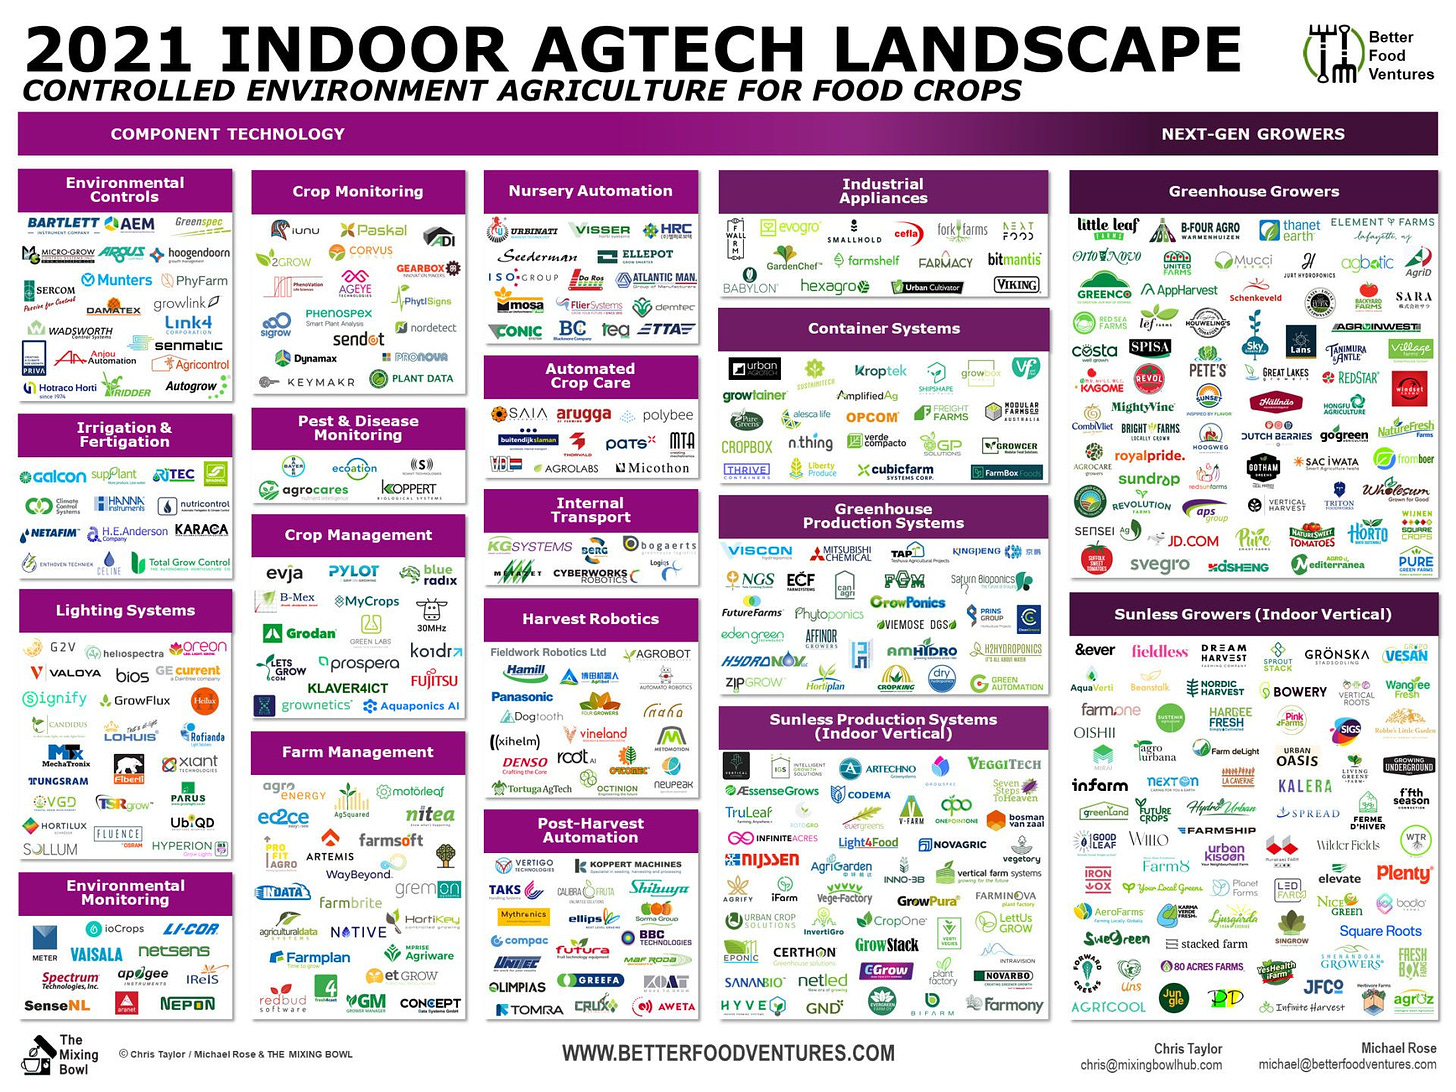 Indoor agtech: An evolving landscape of 1,300+ startups